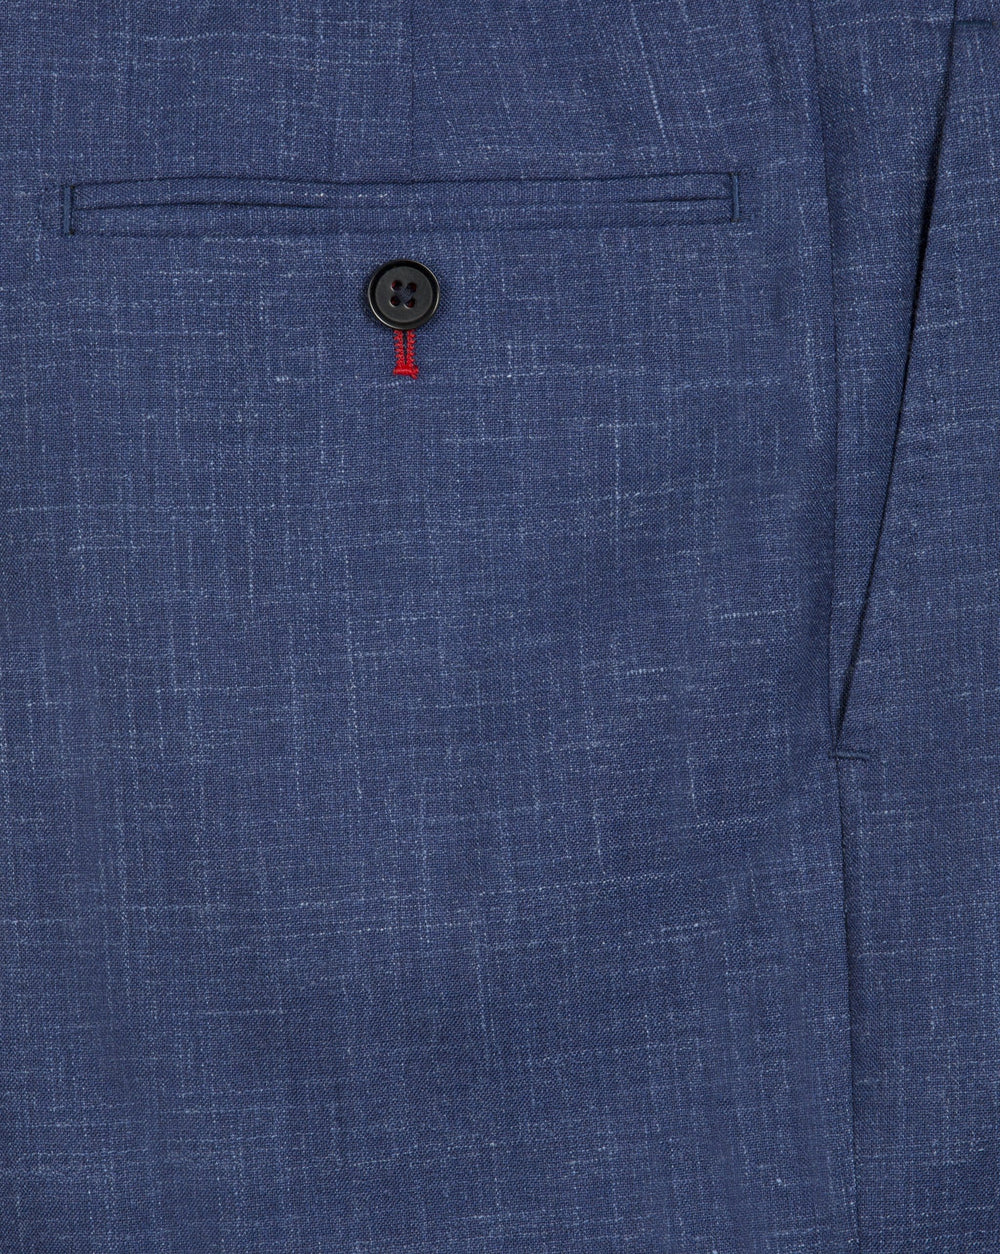 Blue Wool Linen Trousers - Mark marengo